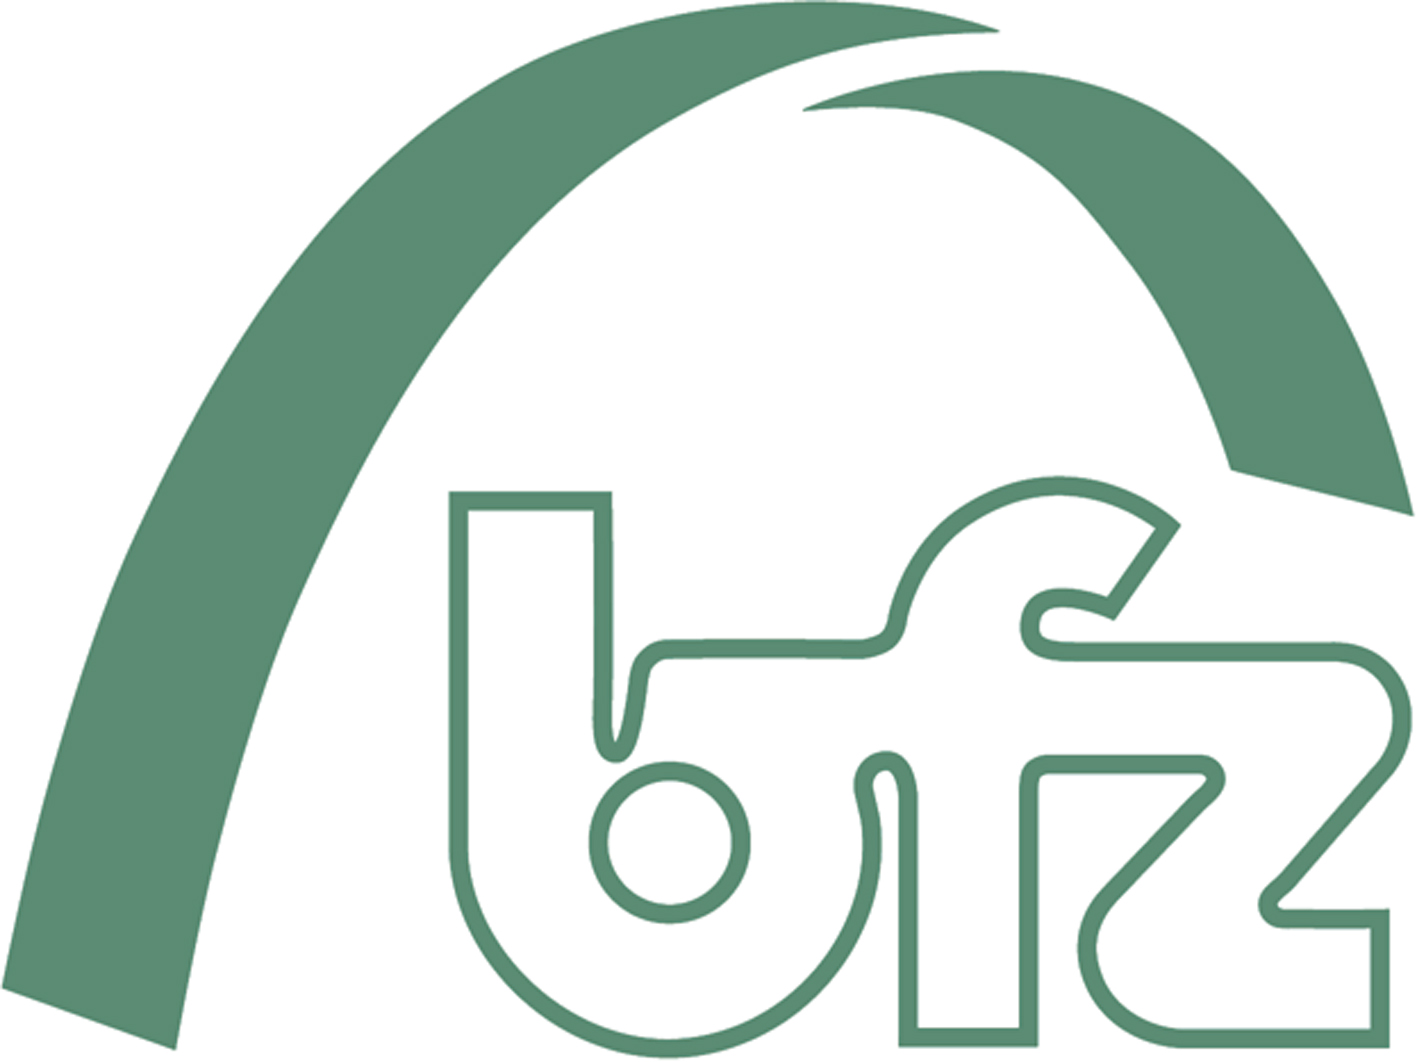 ImageRu Logo photo - 1